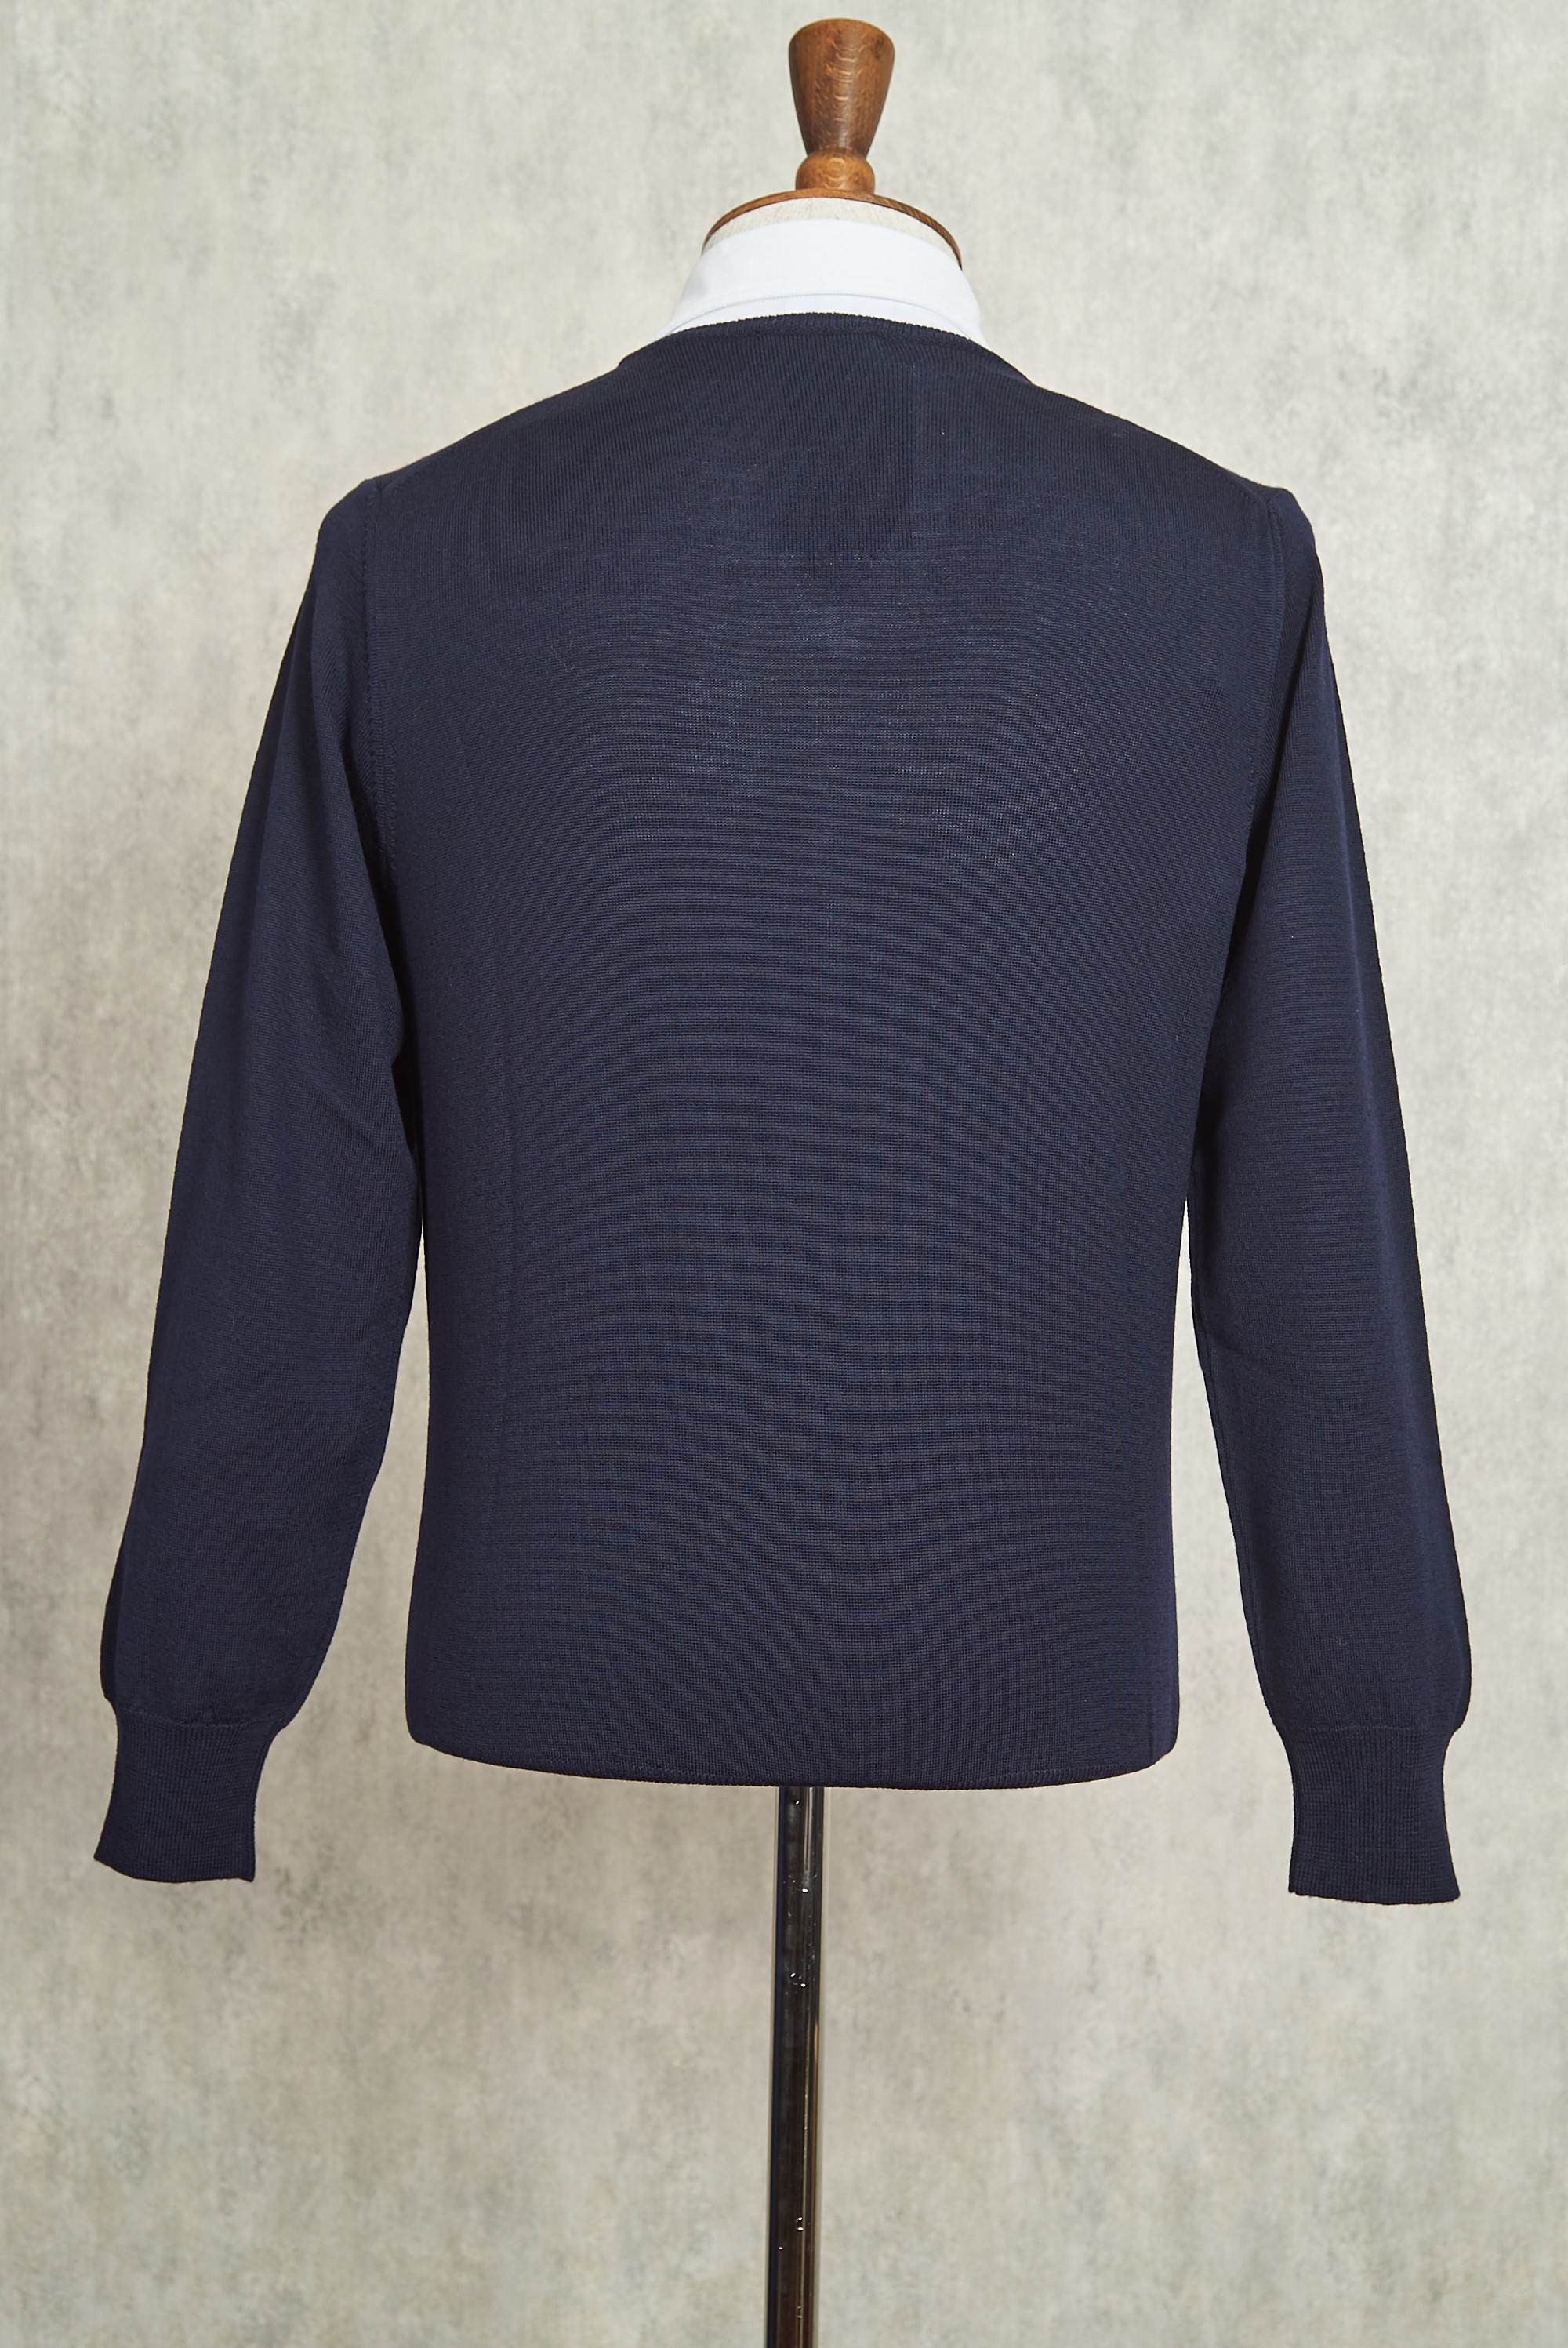 Ascot Chang Navy Extra-Fine Merino Wool V-Neck Sweater